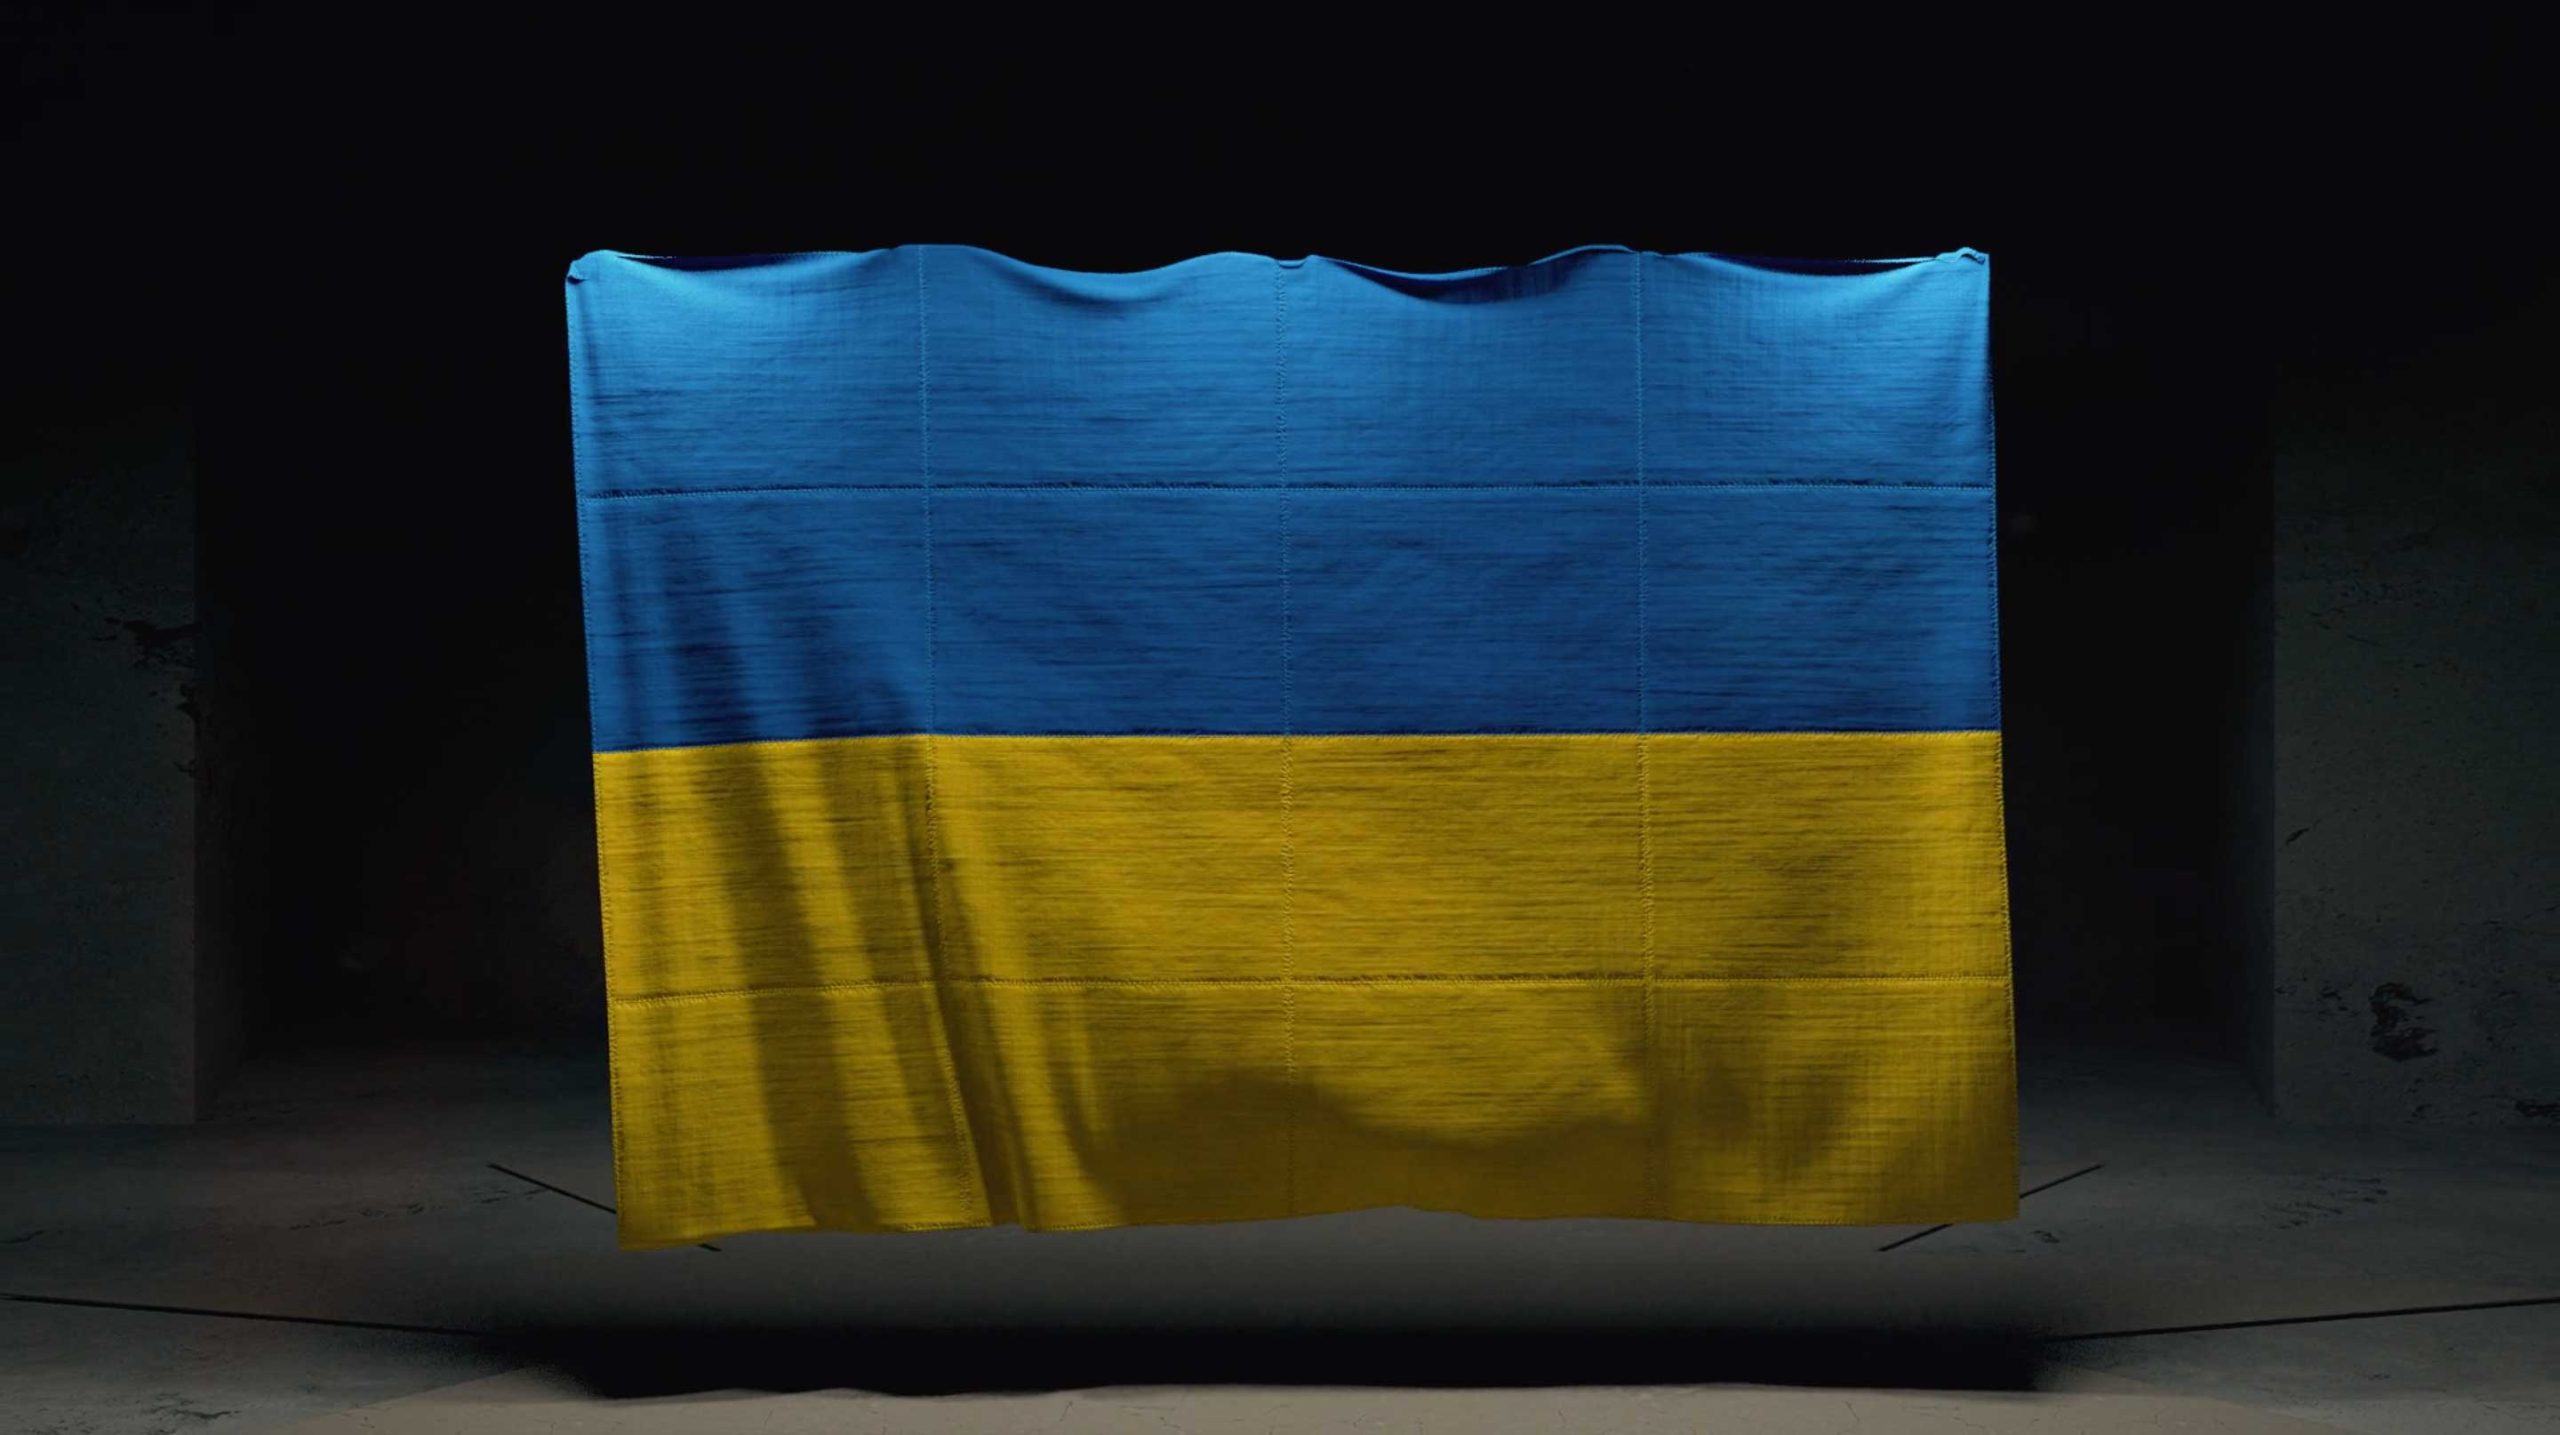 Tribute to Ukraine by Olga Studio | STASH MAGAZINE